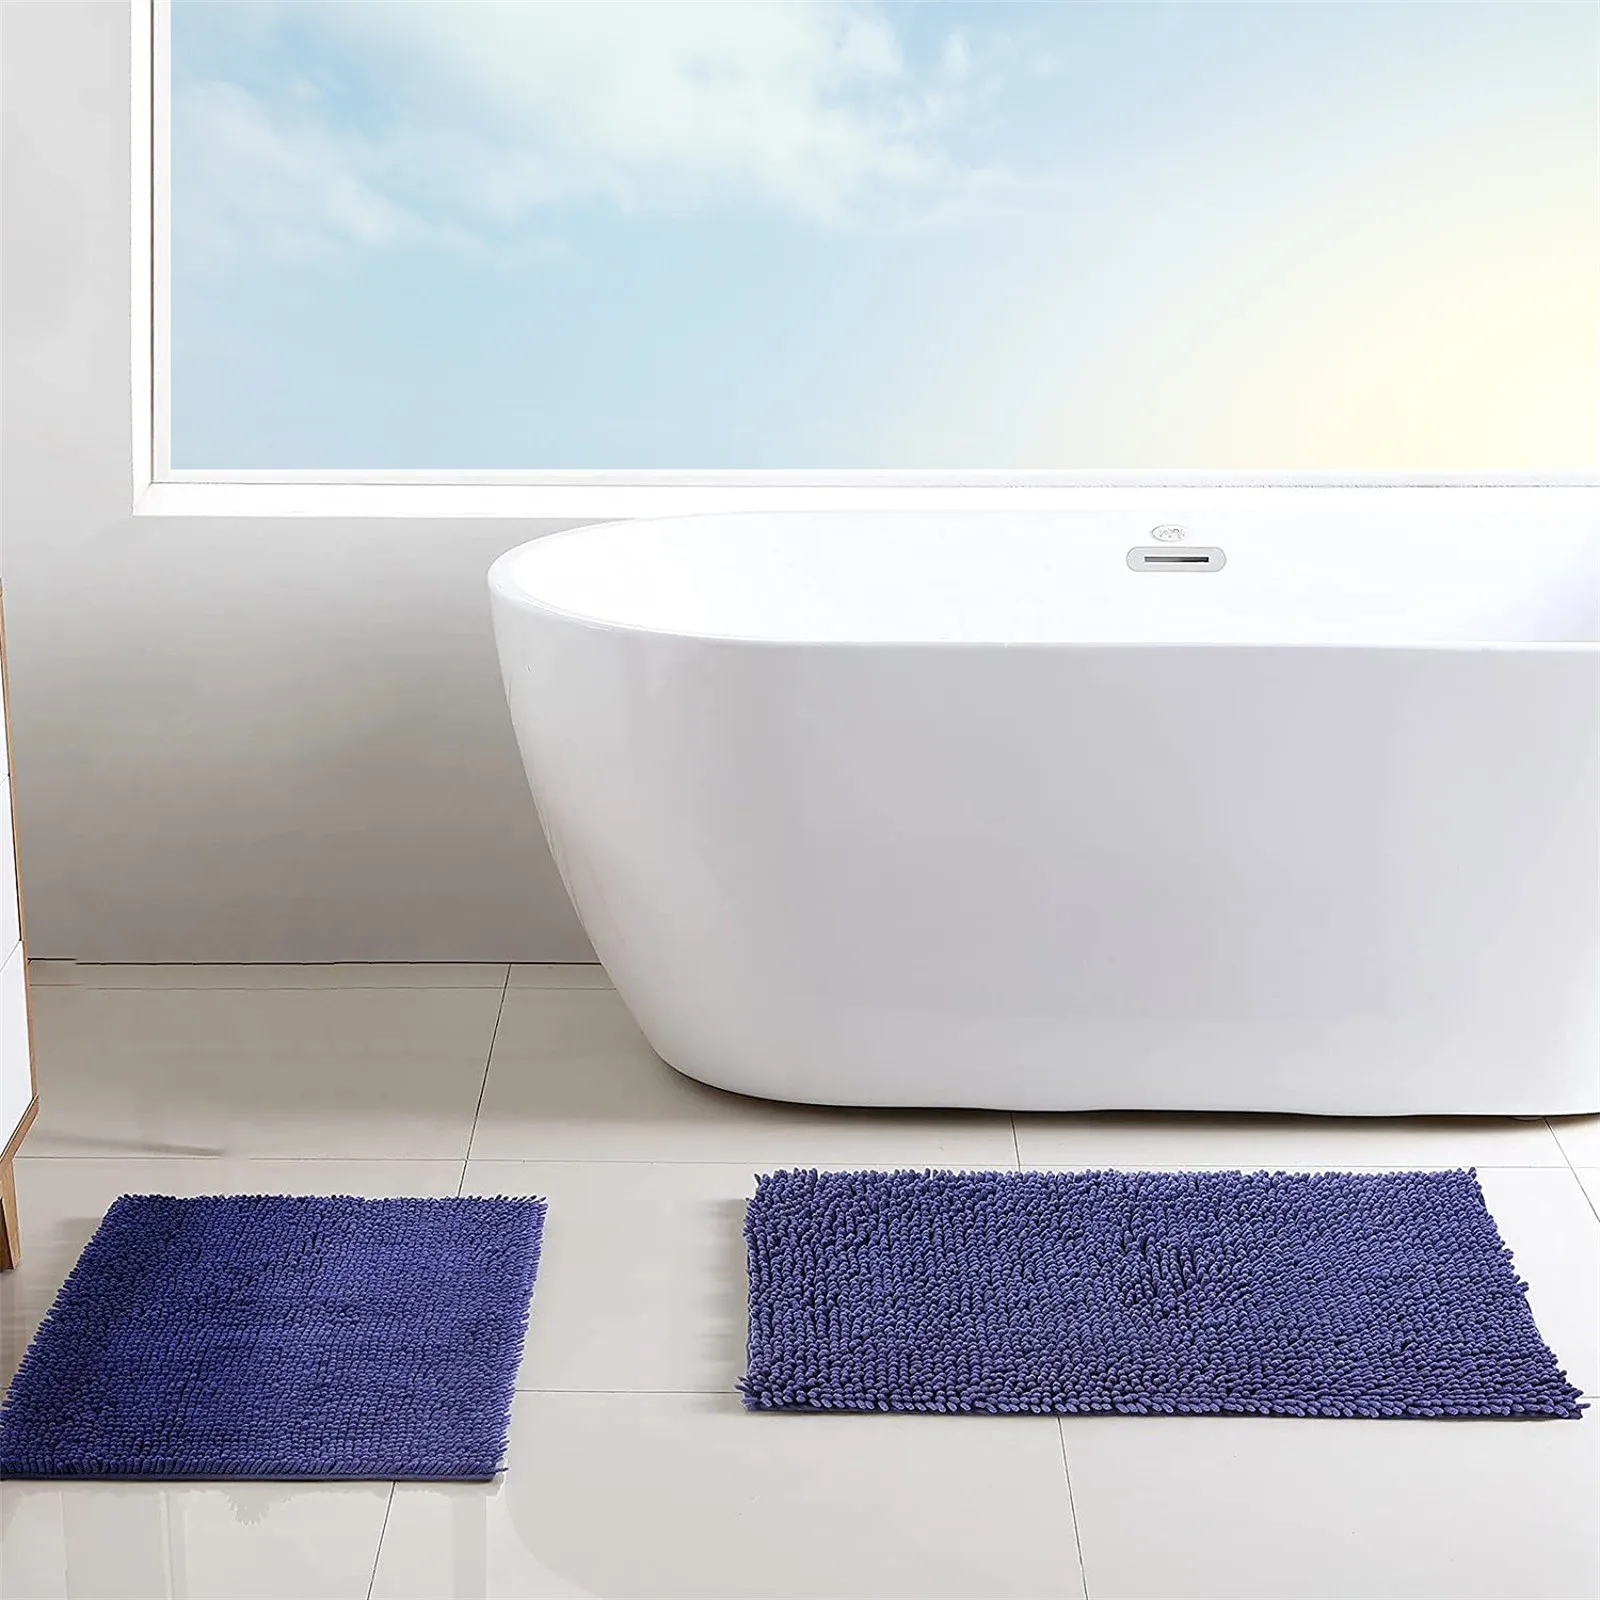 

Bathroom Rugs Memory Foam Bath Mat 3 Piece Rugs Soft Non Slip and Absorbent Bathroom Carpet U-Shaped Contour Rug and Toilet